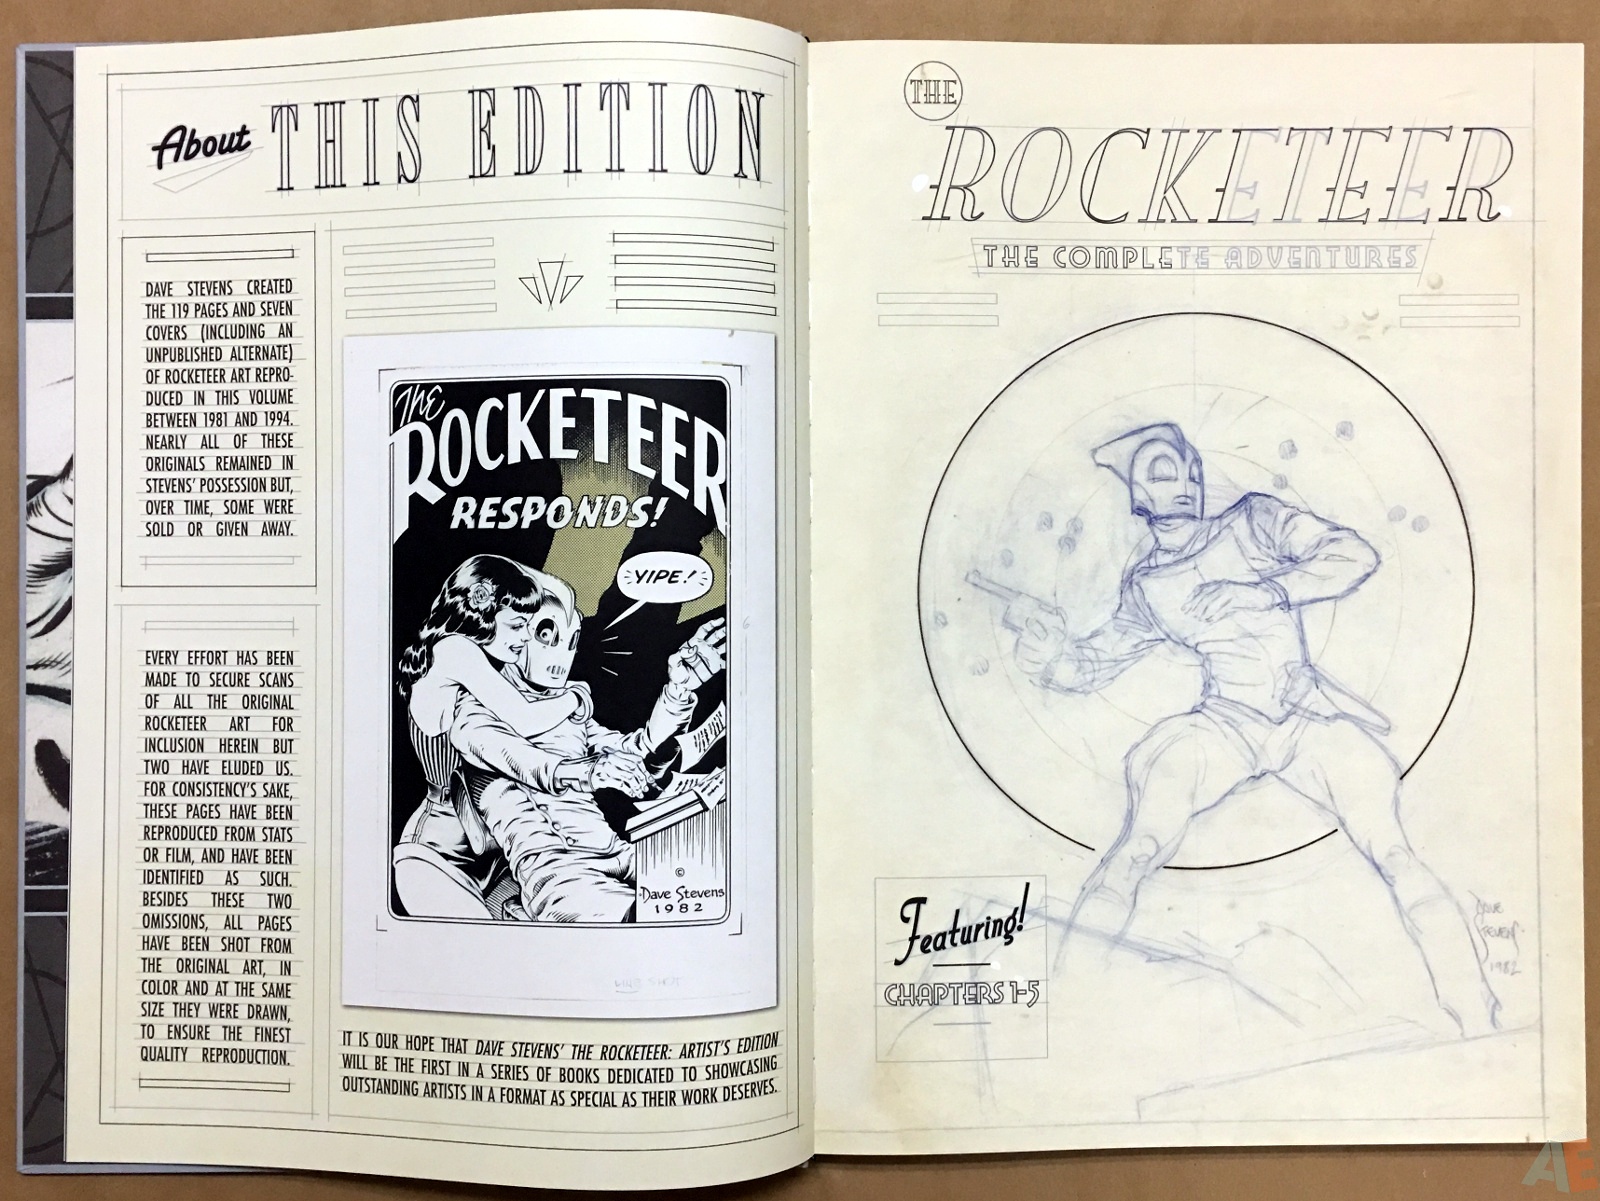 Dave Stevens’ The Rocketeer Artist’s Edition